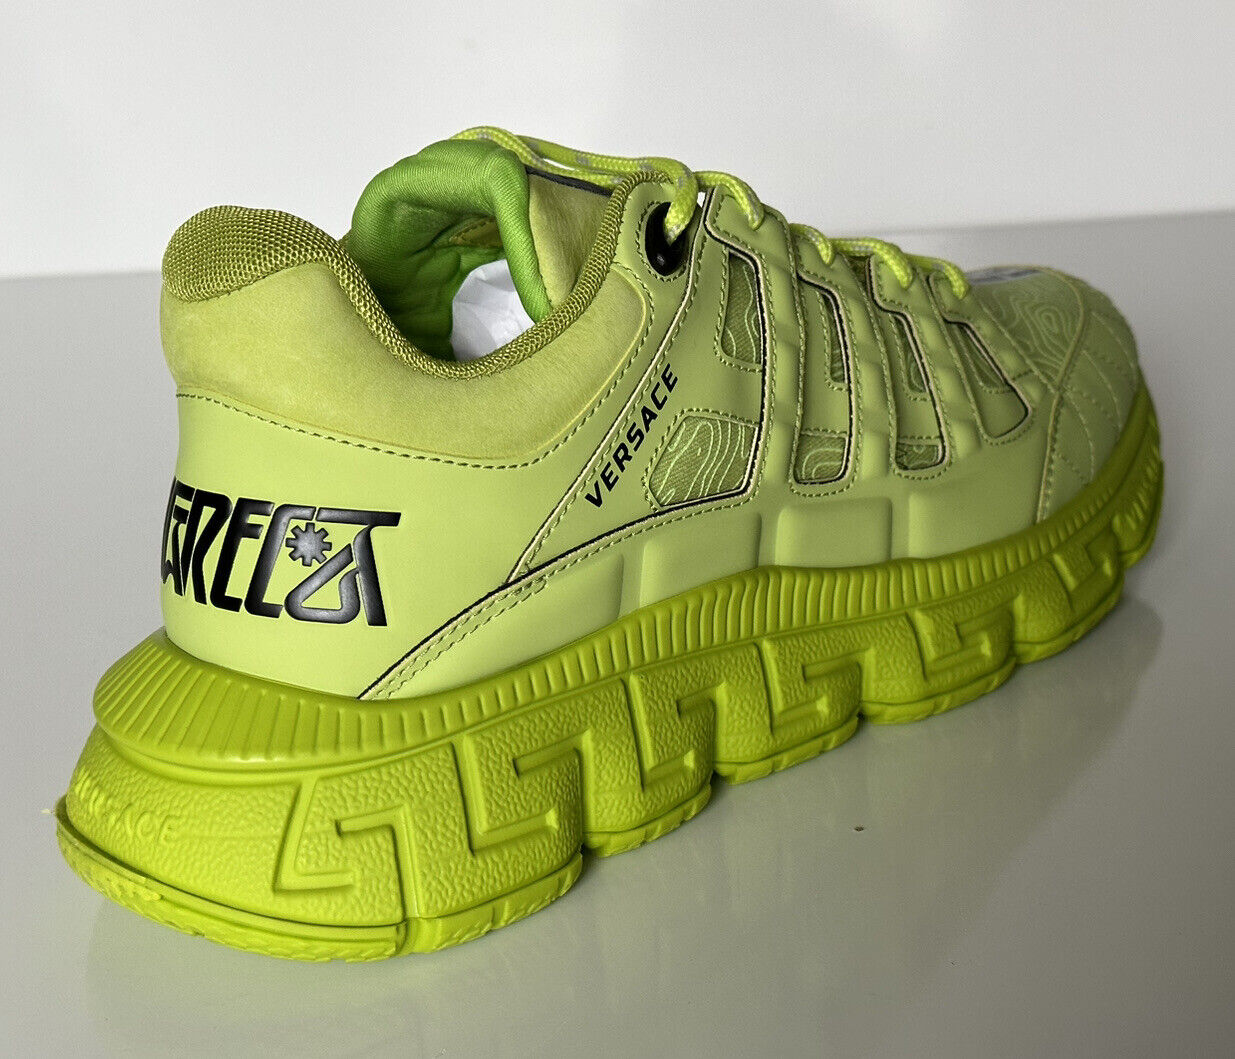 NIB $895 Versace Trigreca Chain Reaction Sneakers Citron 11,5 (44,5) IT DSU8094 